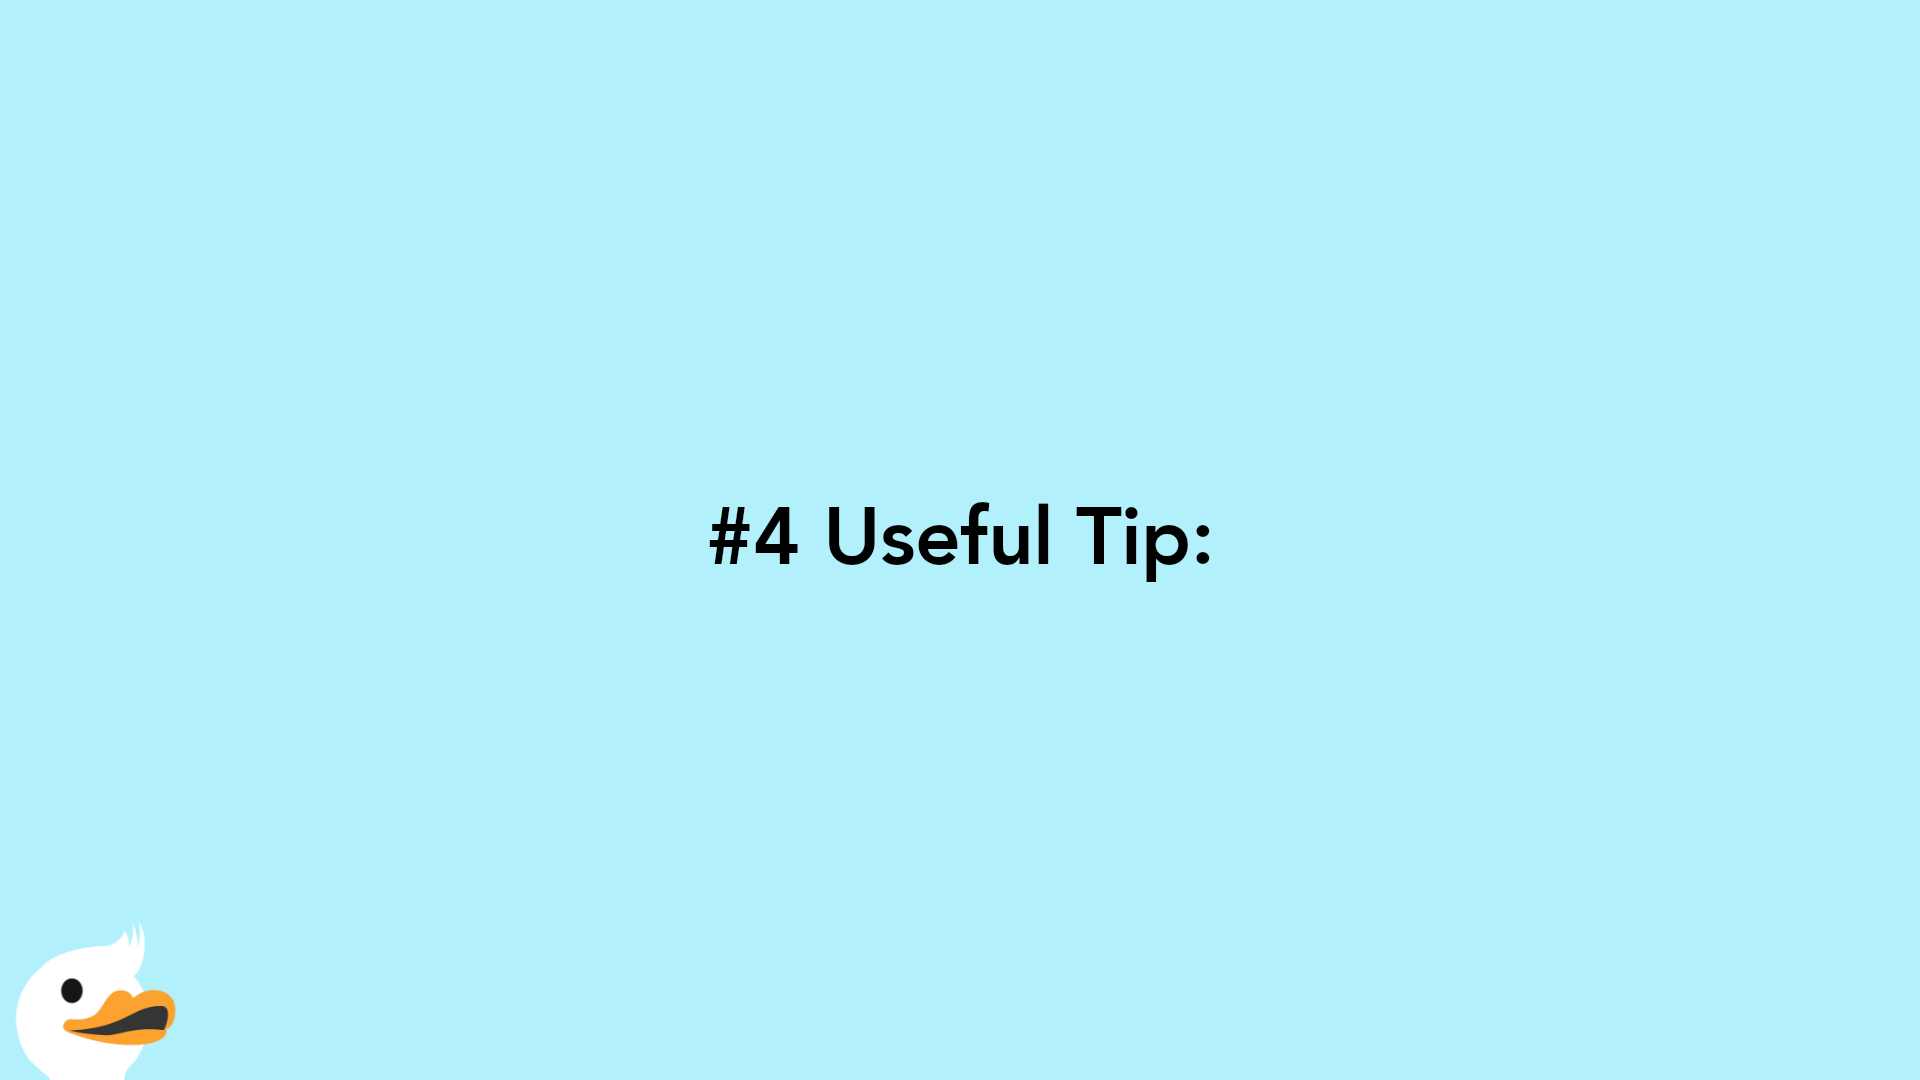 #4 Useful Tip: